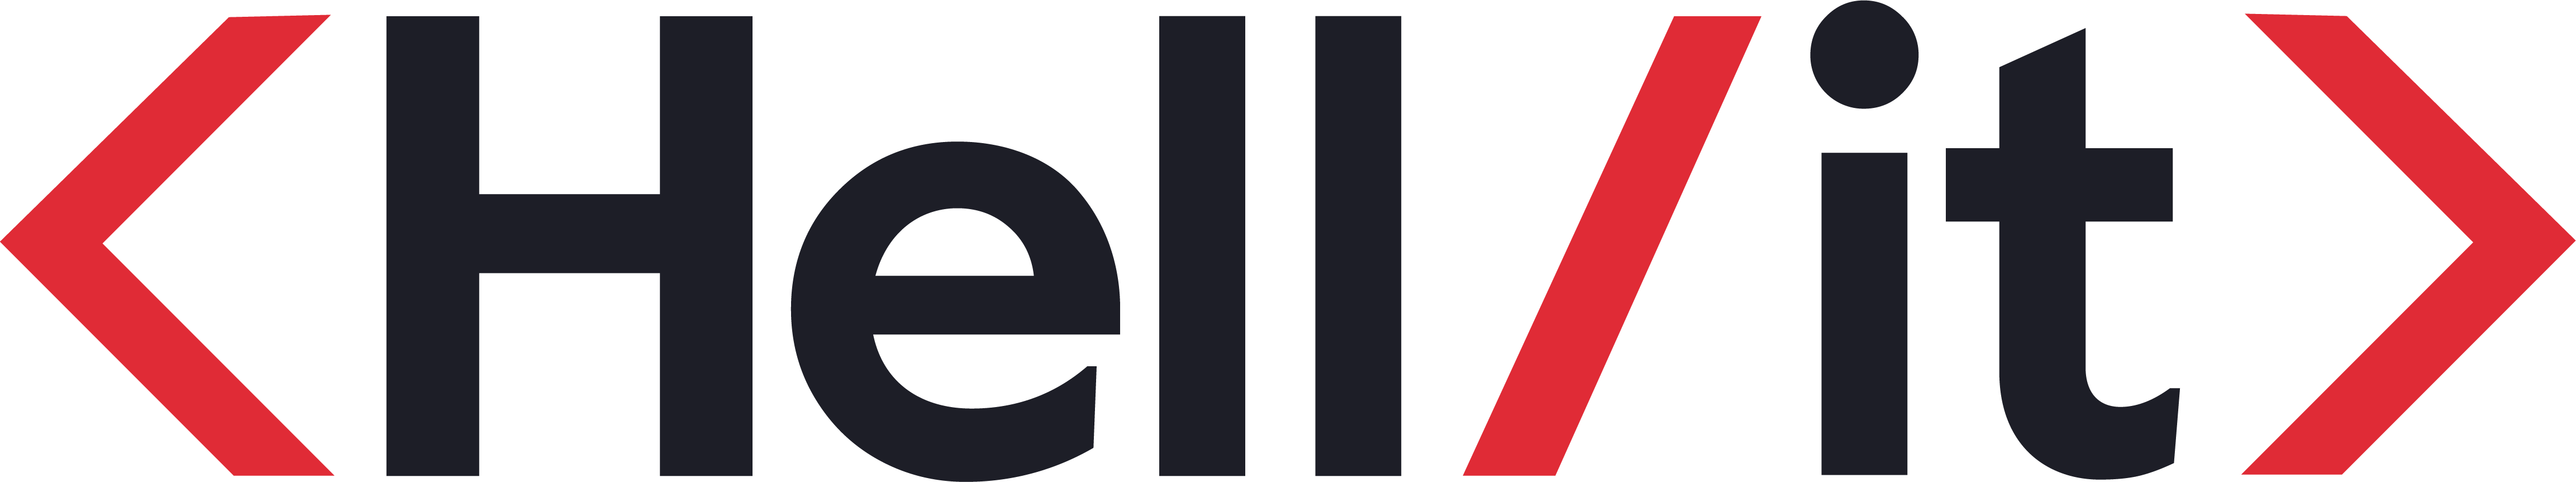 HelliT_logo_black&red@2x